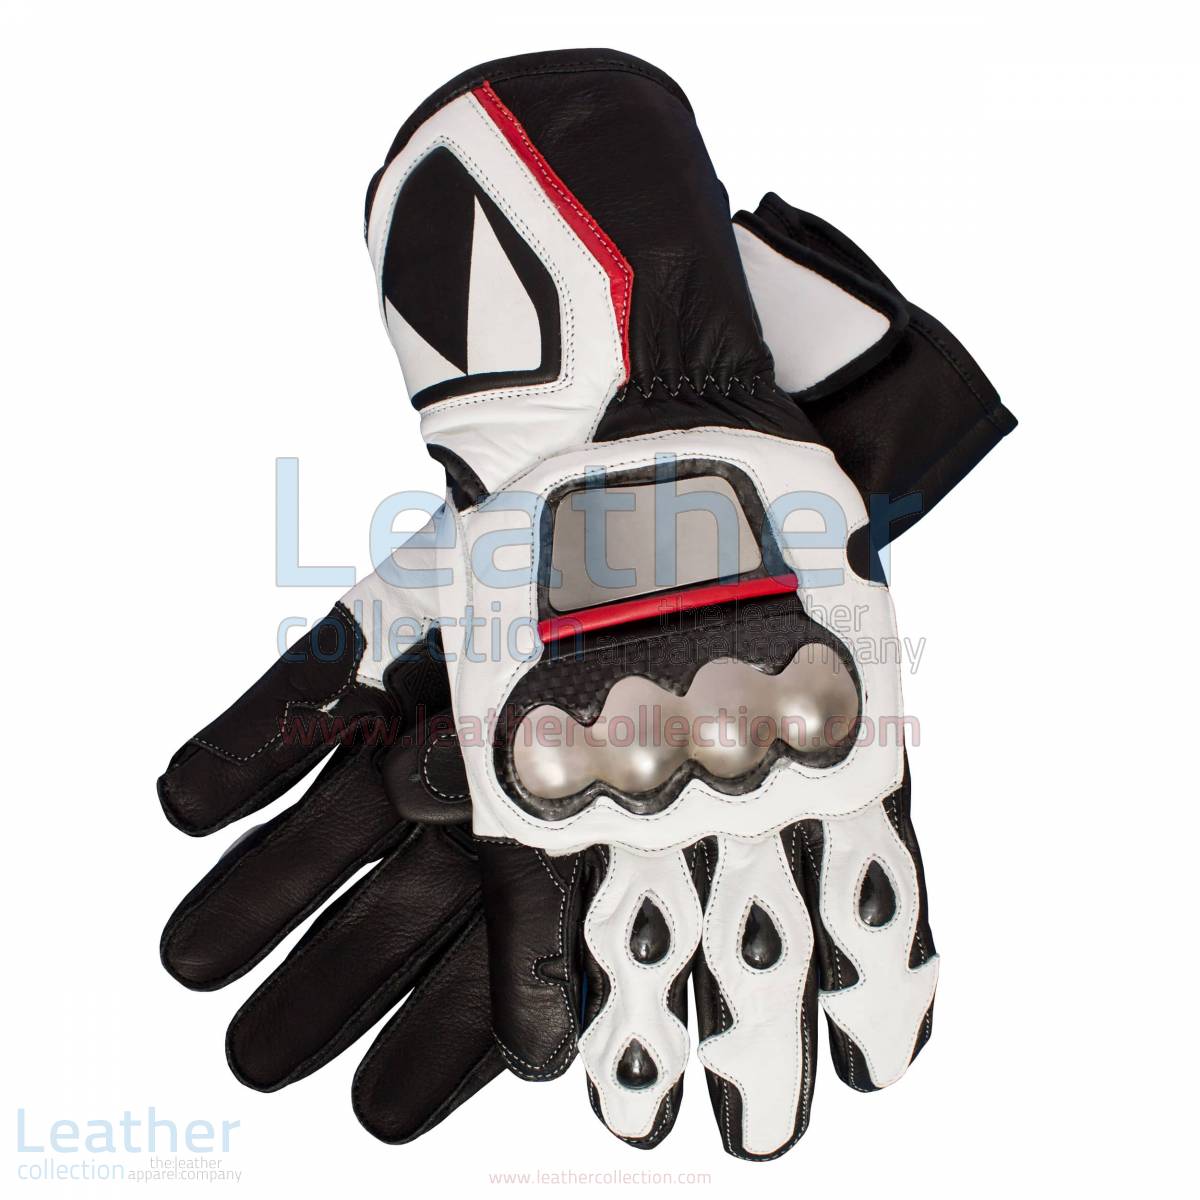 max biaggi motorcycle race gloves